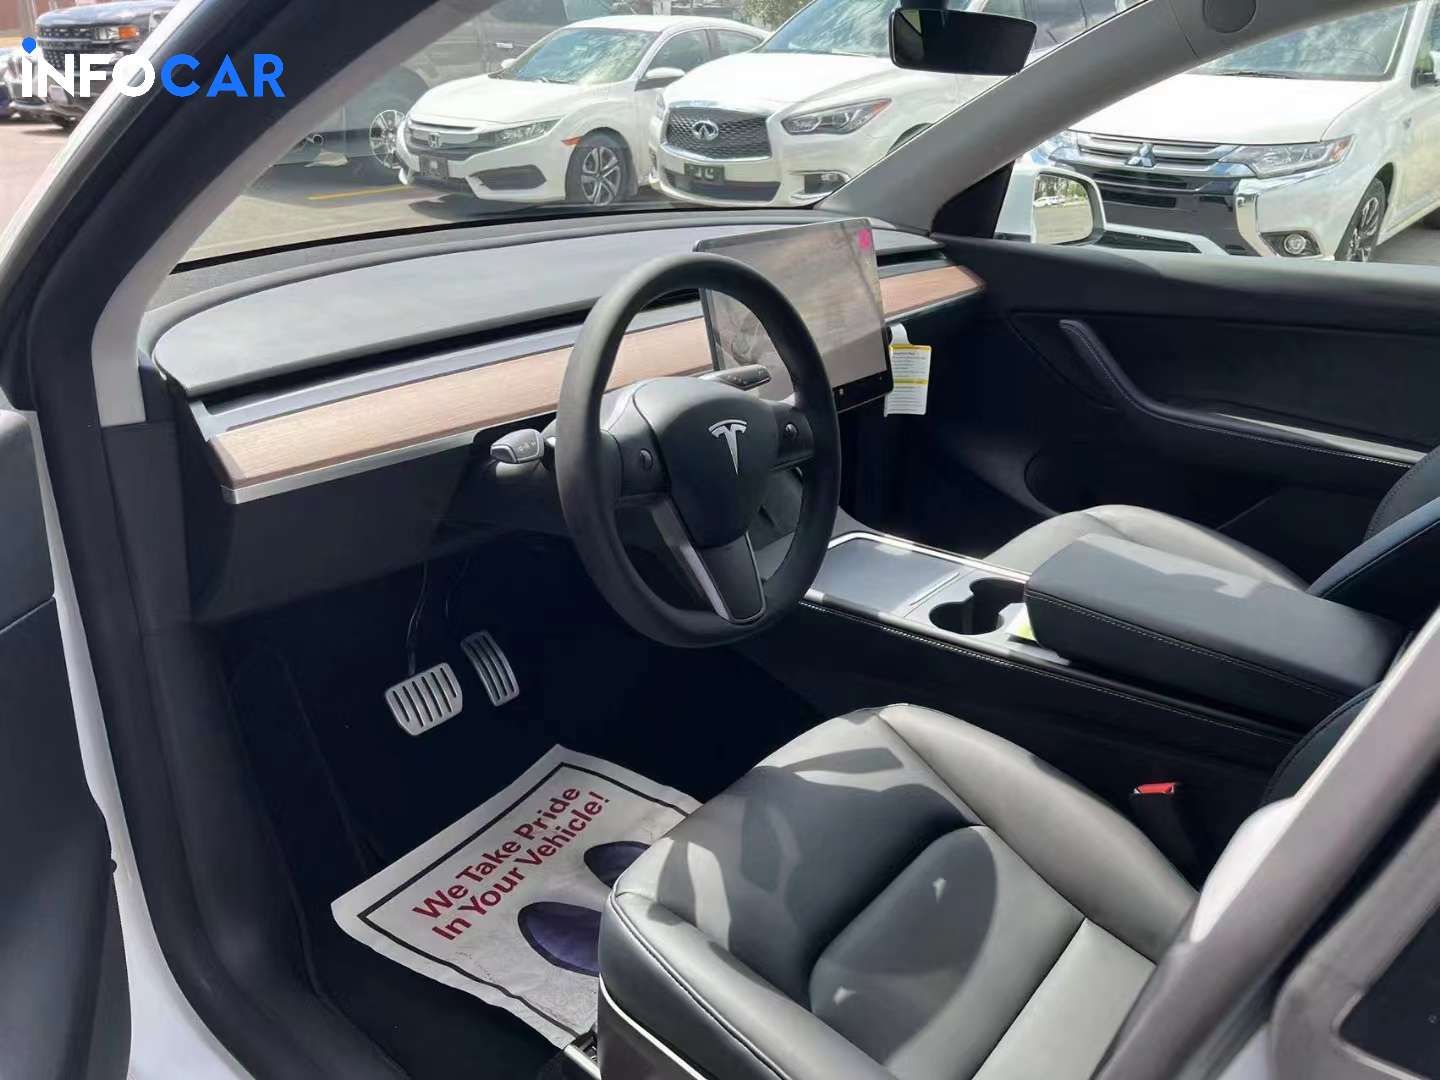 2022 Tesla Model Y Perfromance - INFOCAR - Toronto Auto Trading Platform